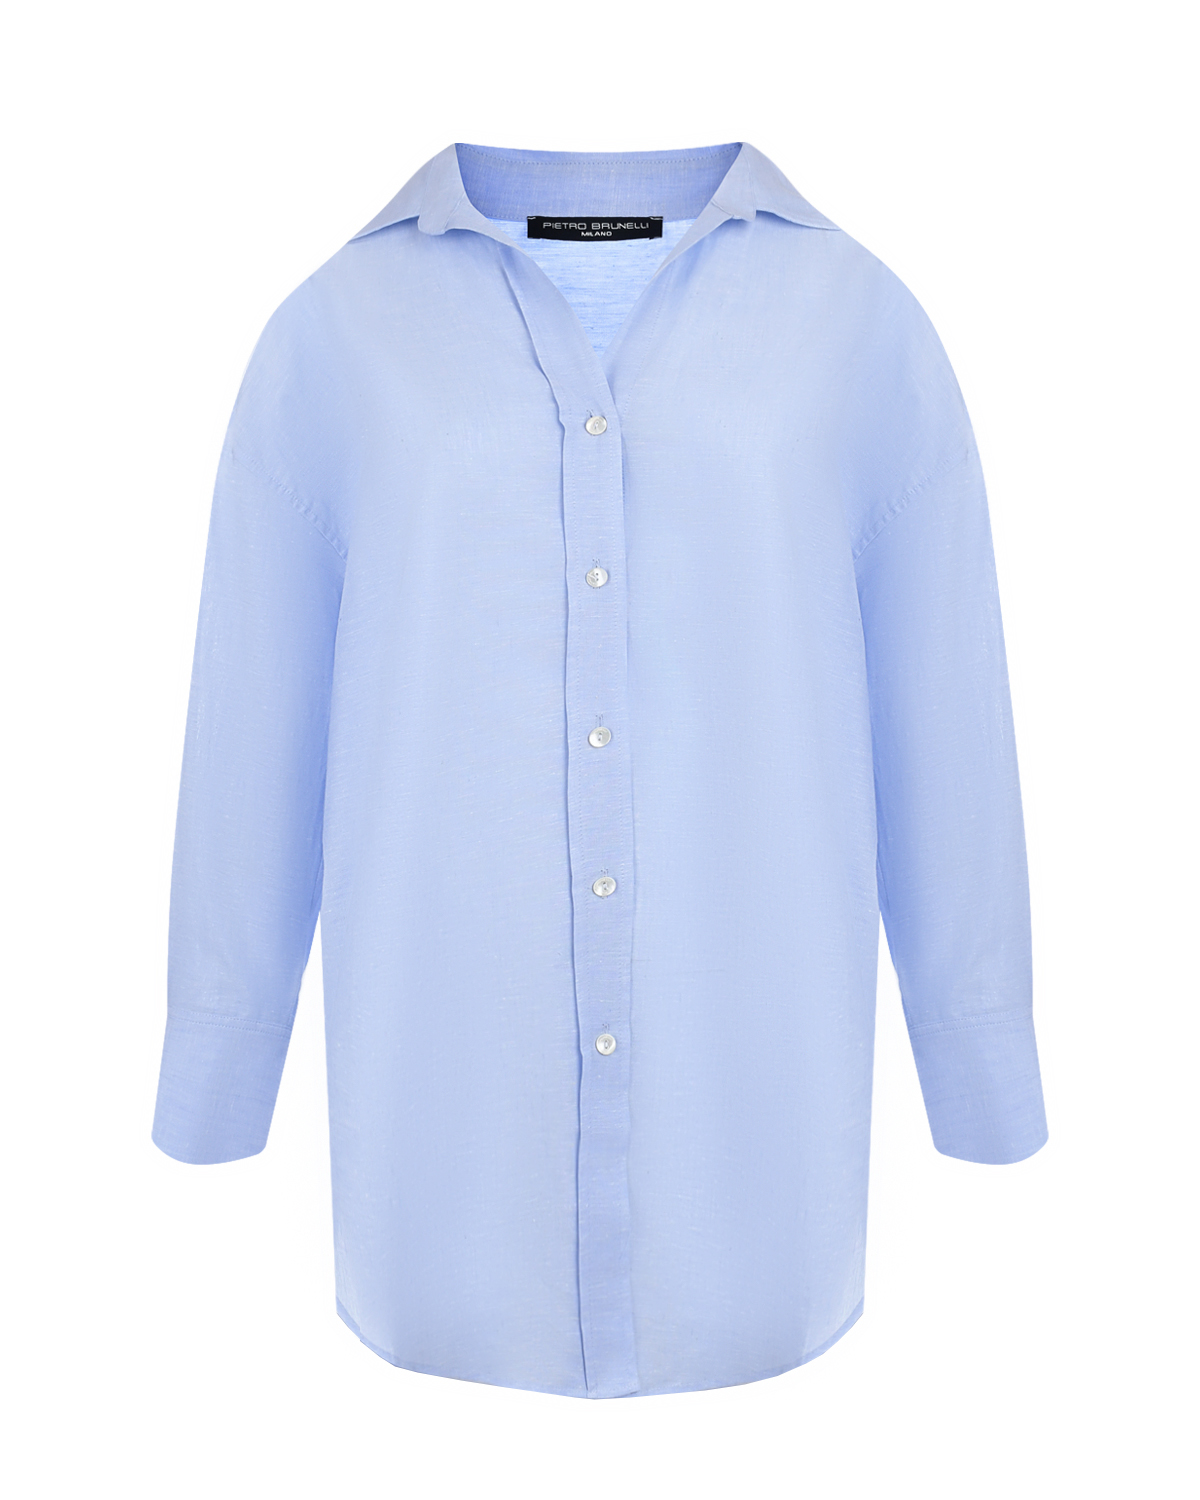 Голубая рубашка oversize Pietro Brunelli, размер 40, цвет голубой - фото 1